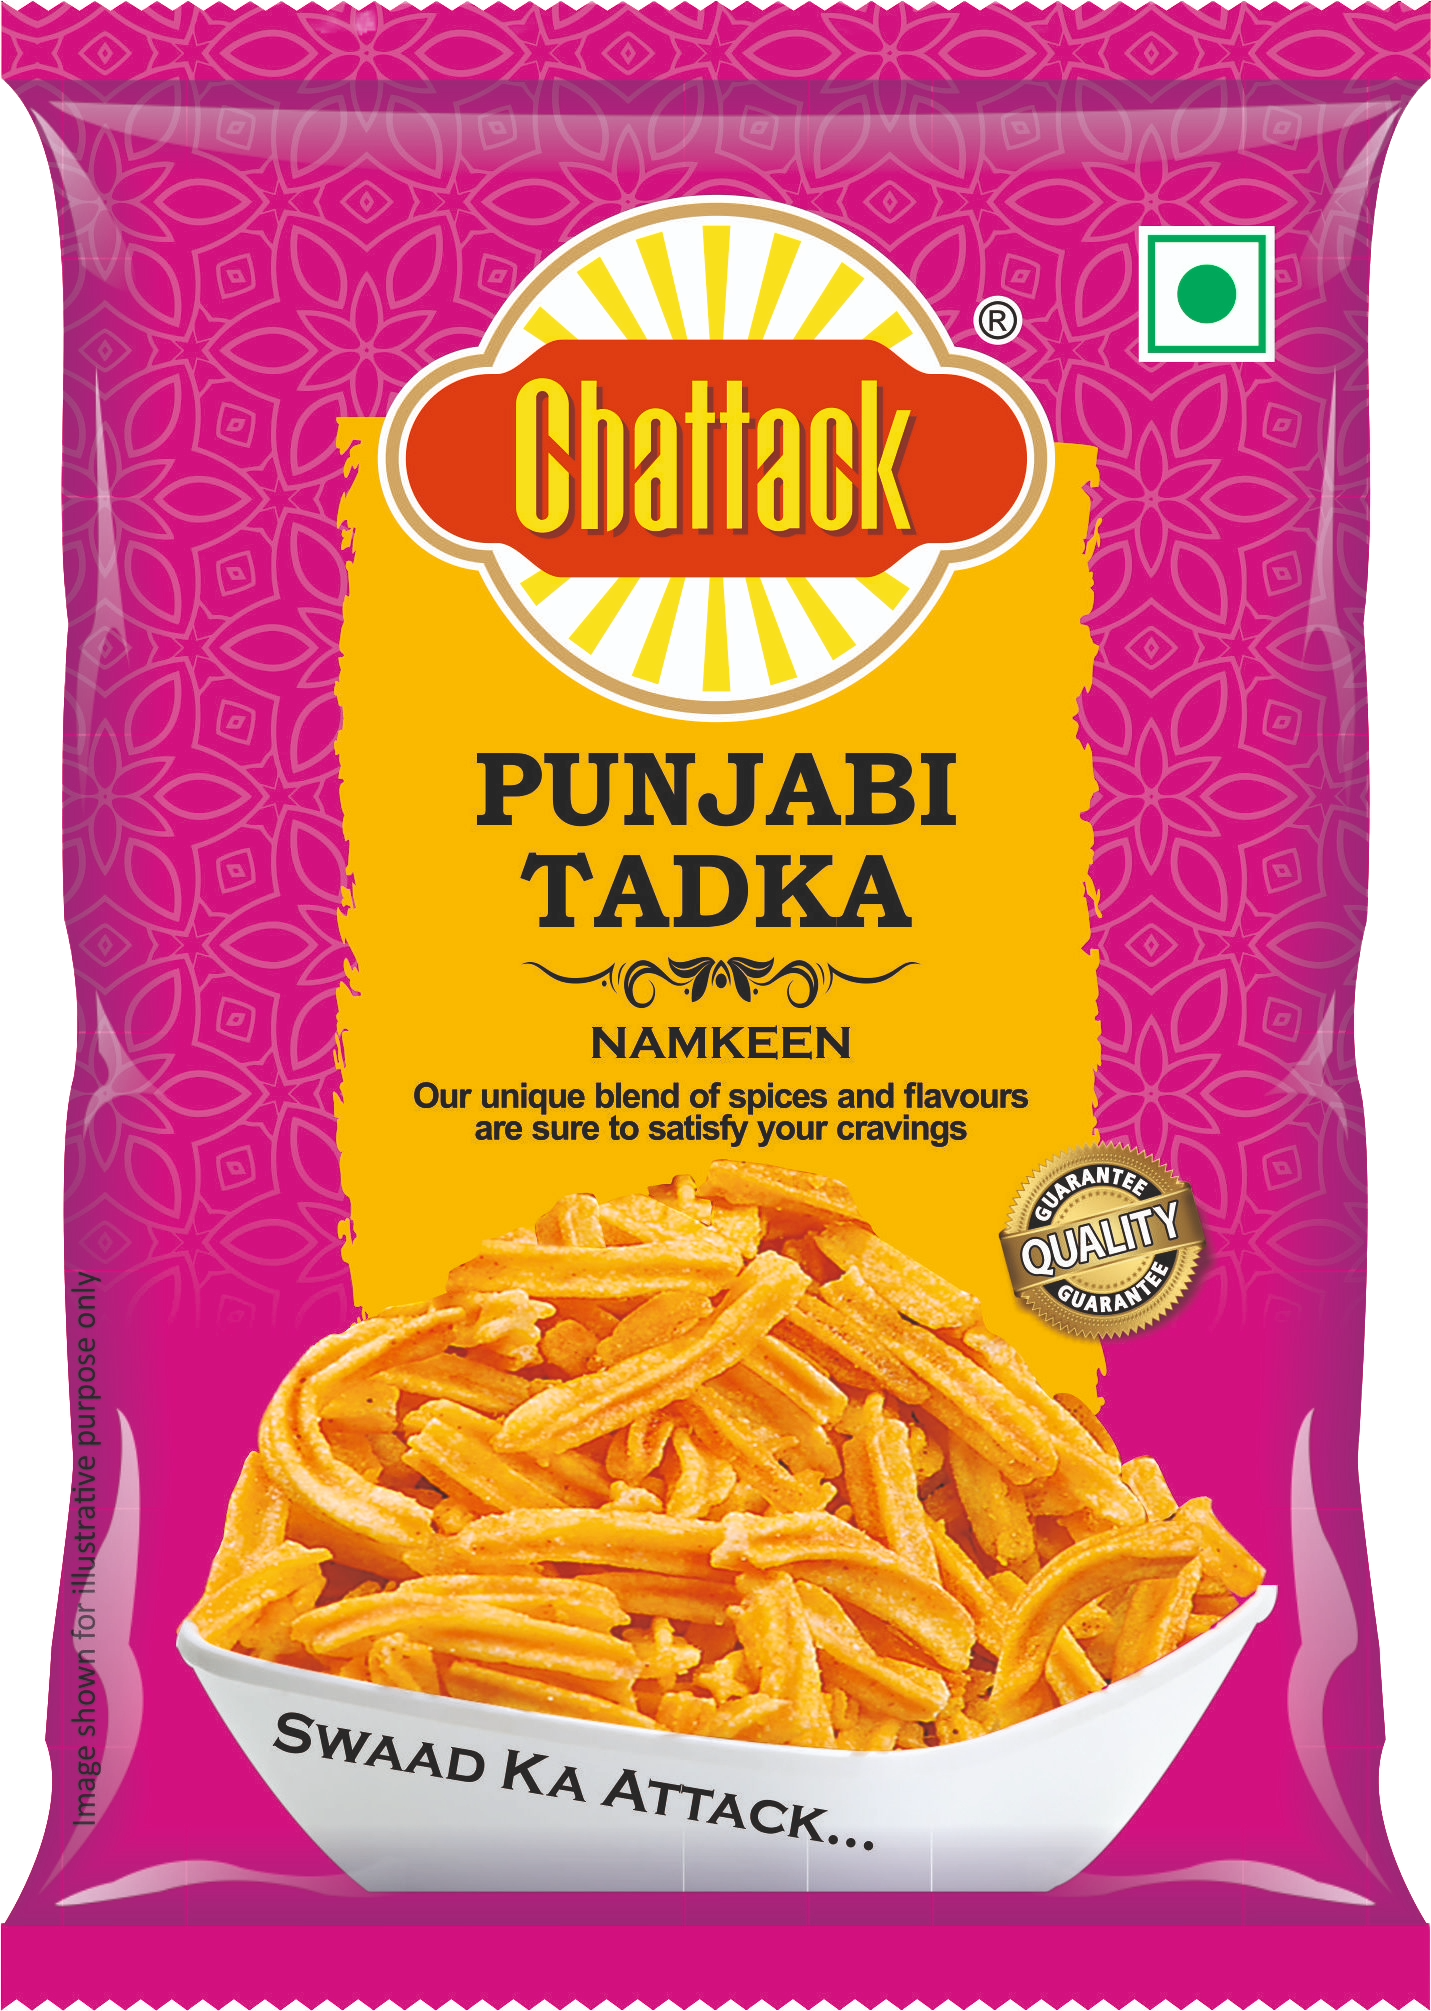 Best Punjabi Tadka Namkeen by Chattack Namkeens